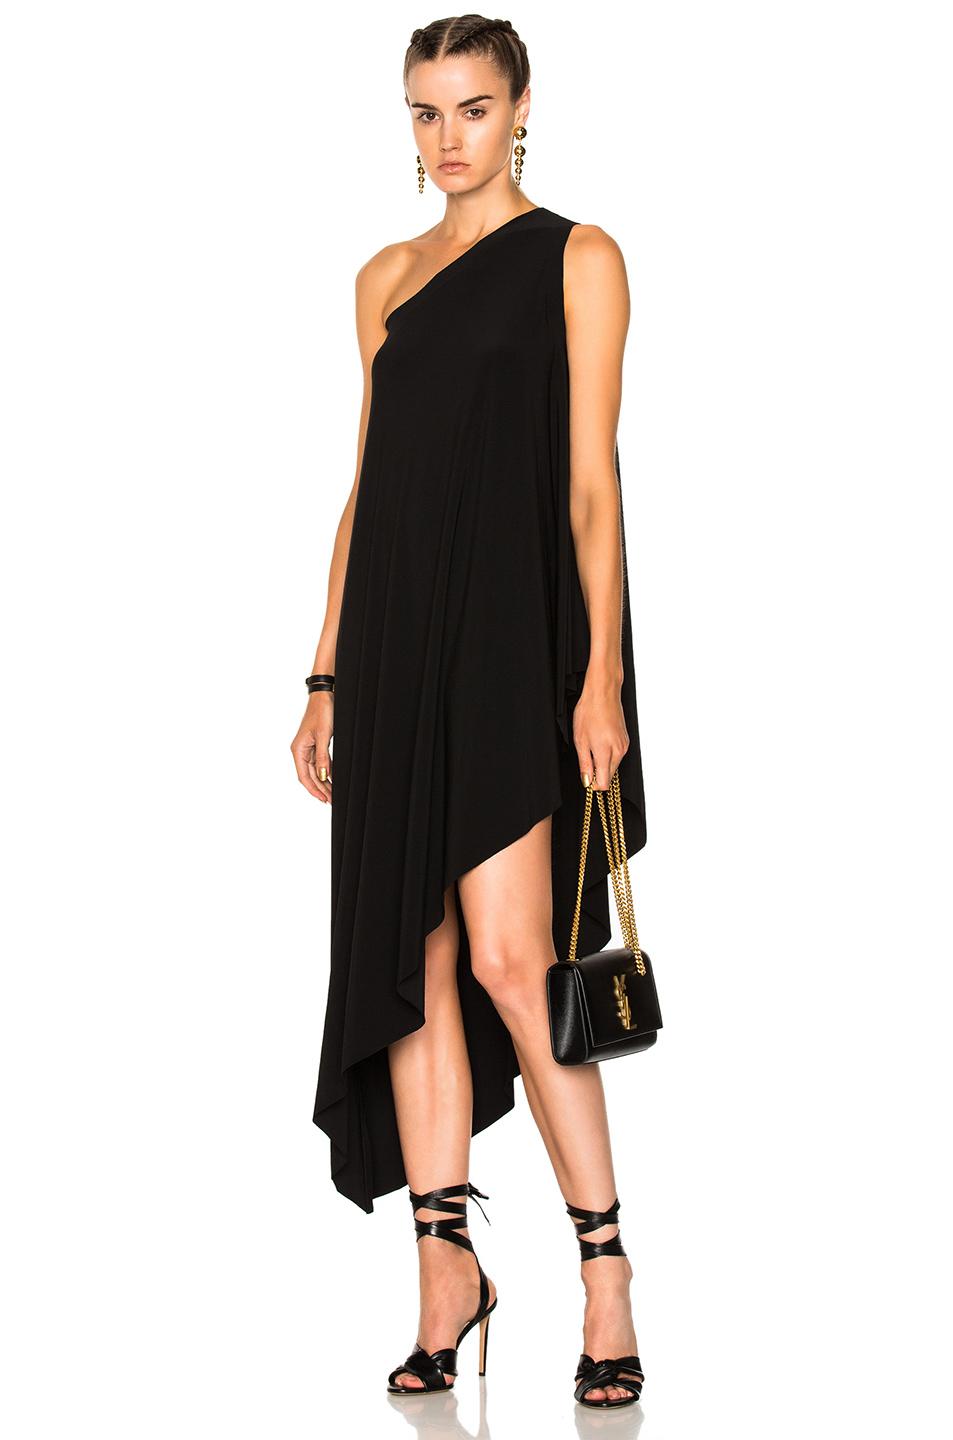 Lyst - Norma Kamali One Shoulder Diagonal Dress in Black